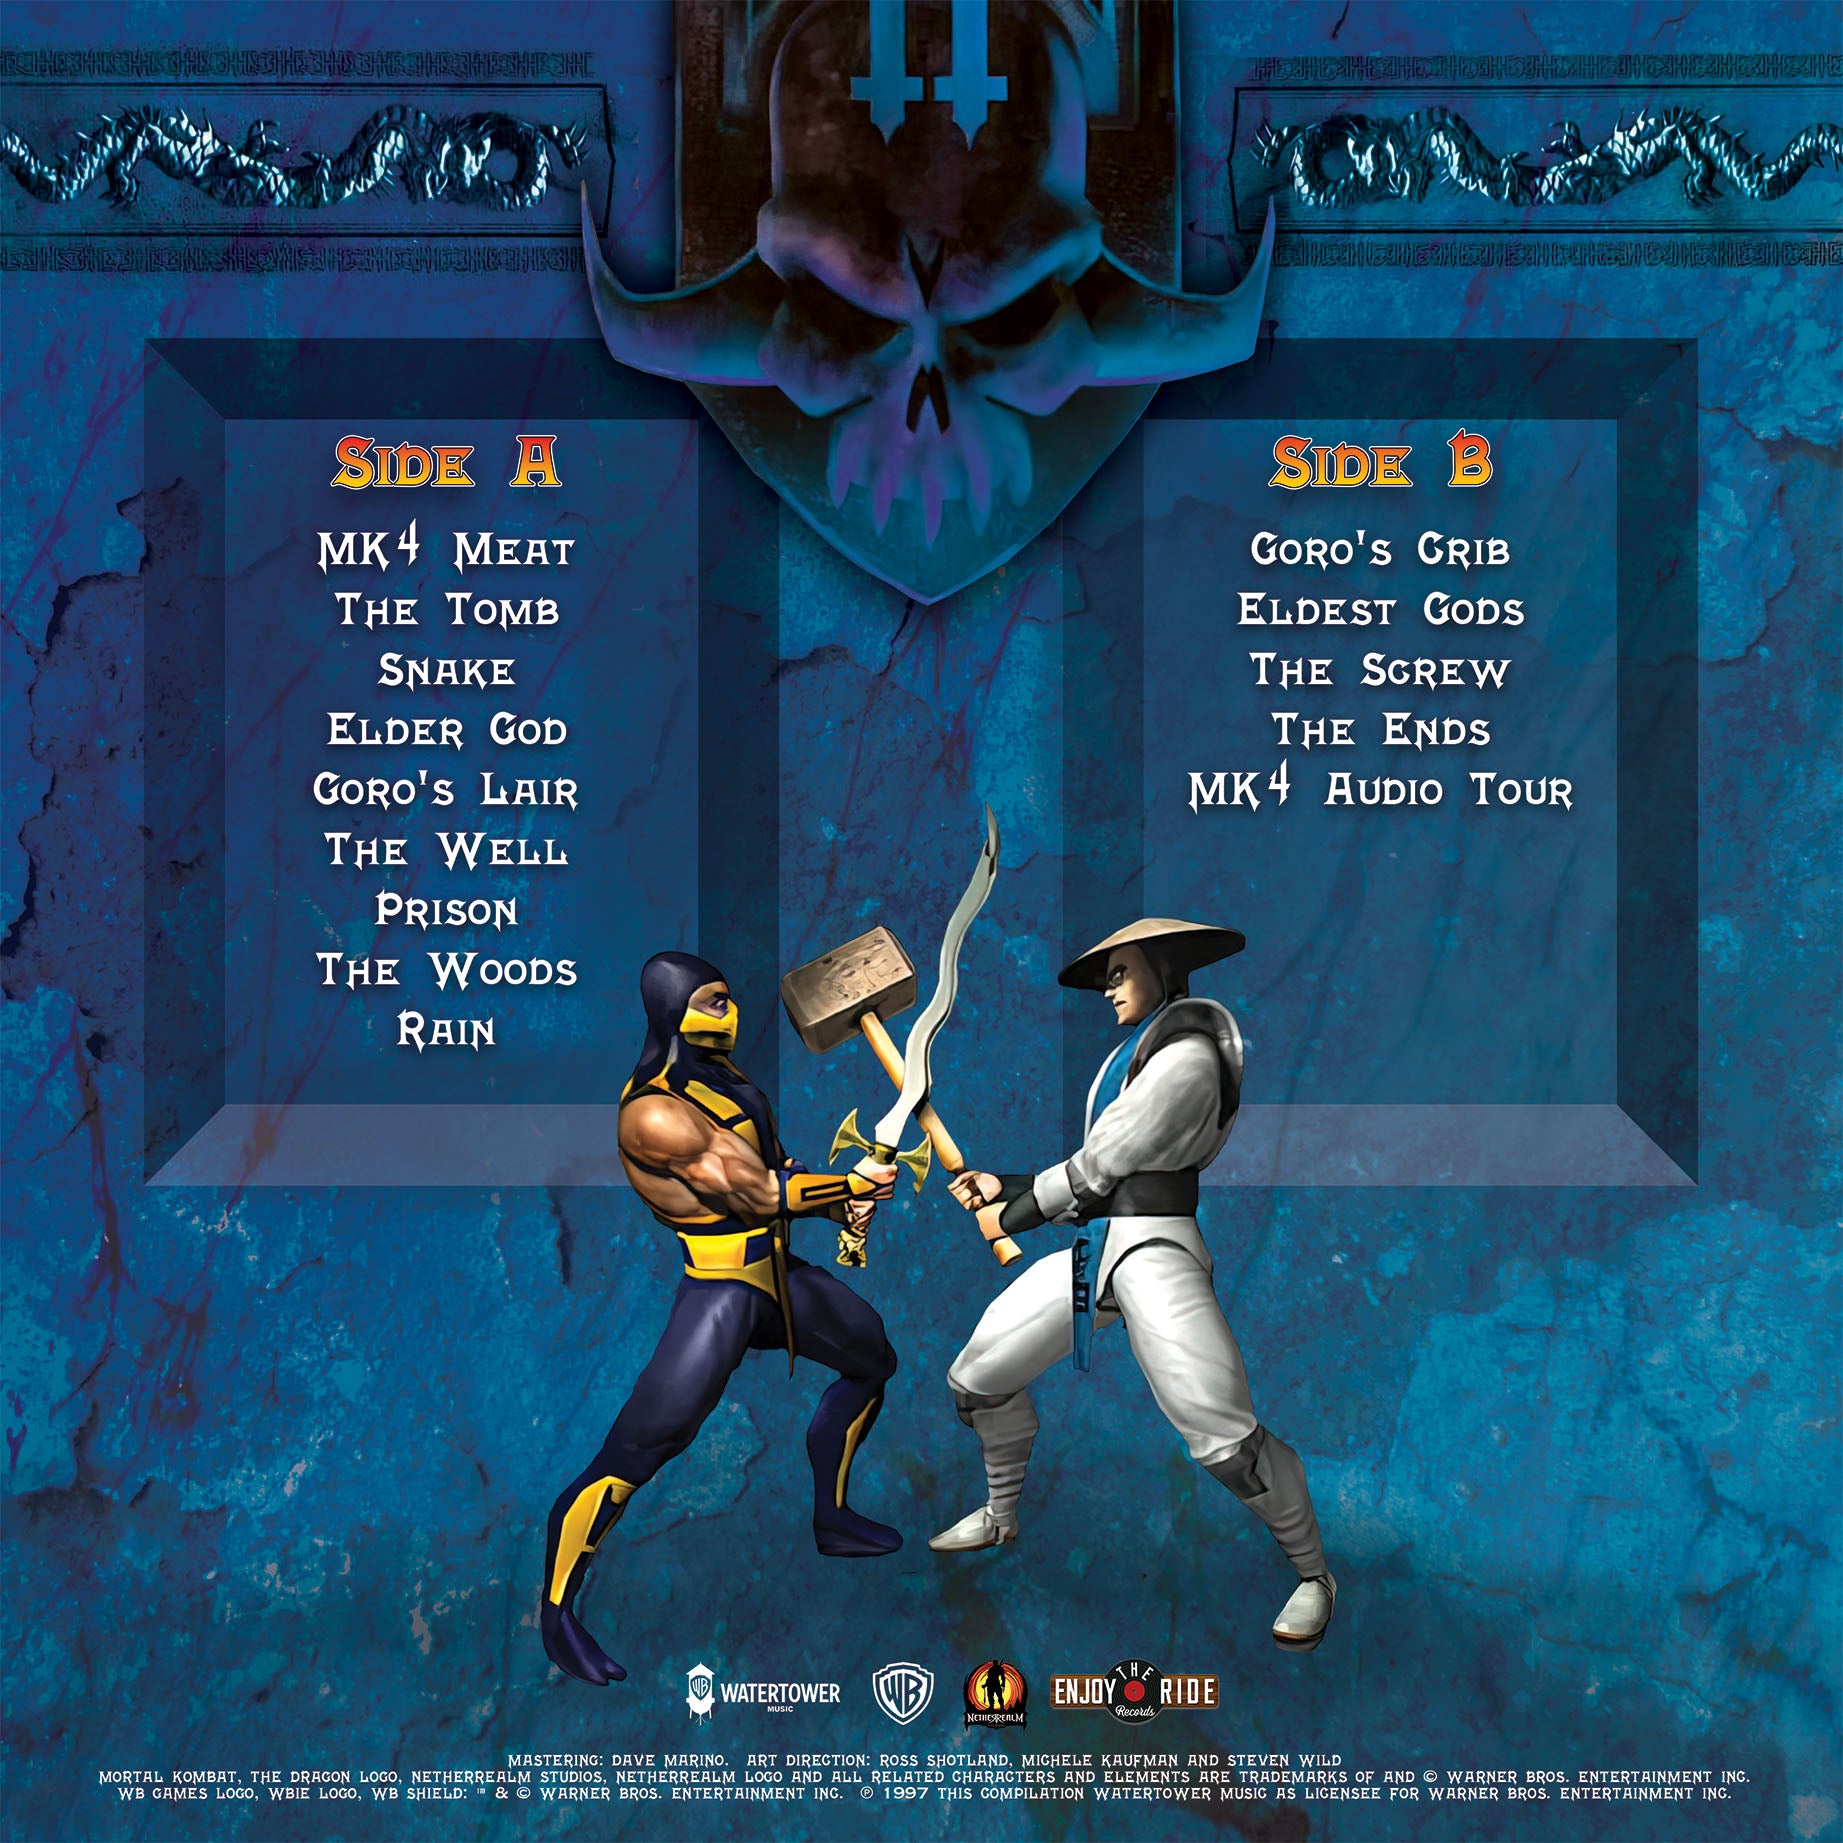 ETR154 - Mortal Kombat 4 - Soundtrack From The Arcade Game Soundtrack